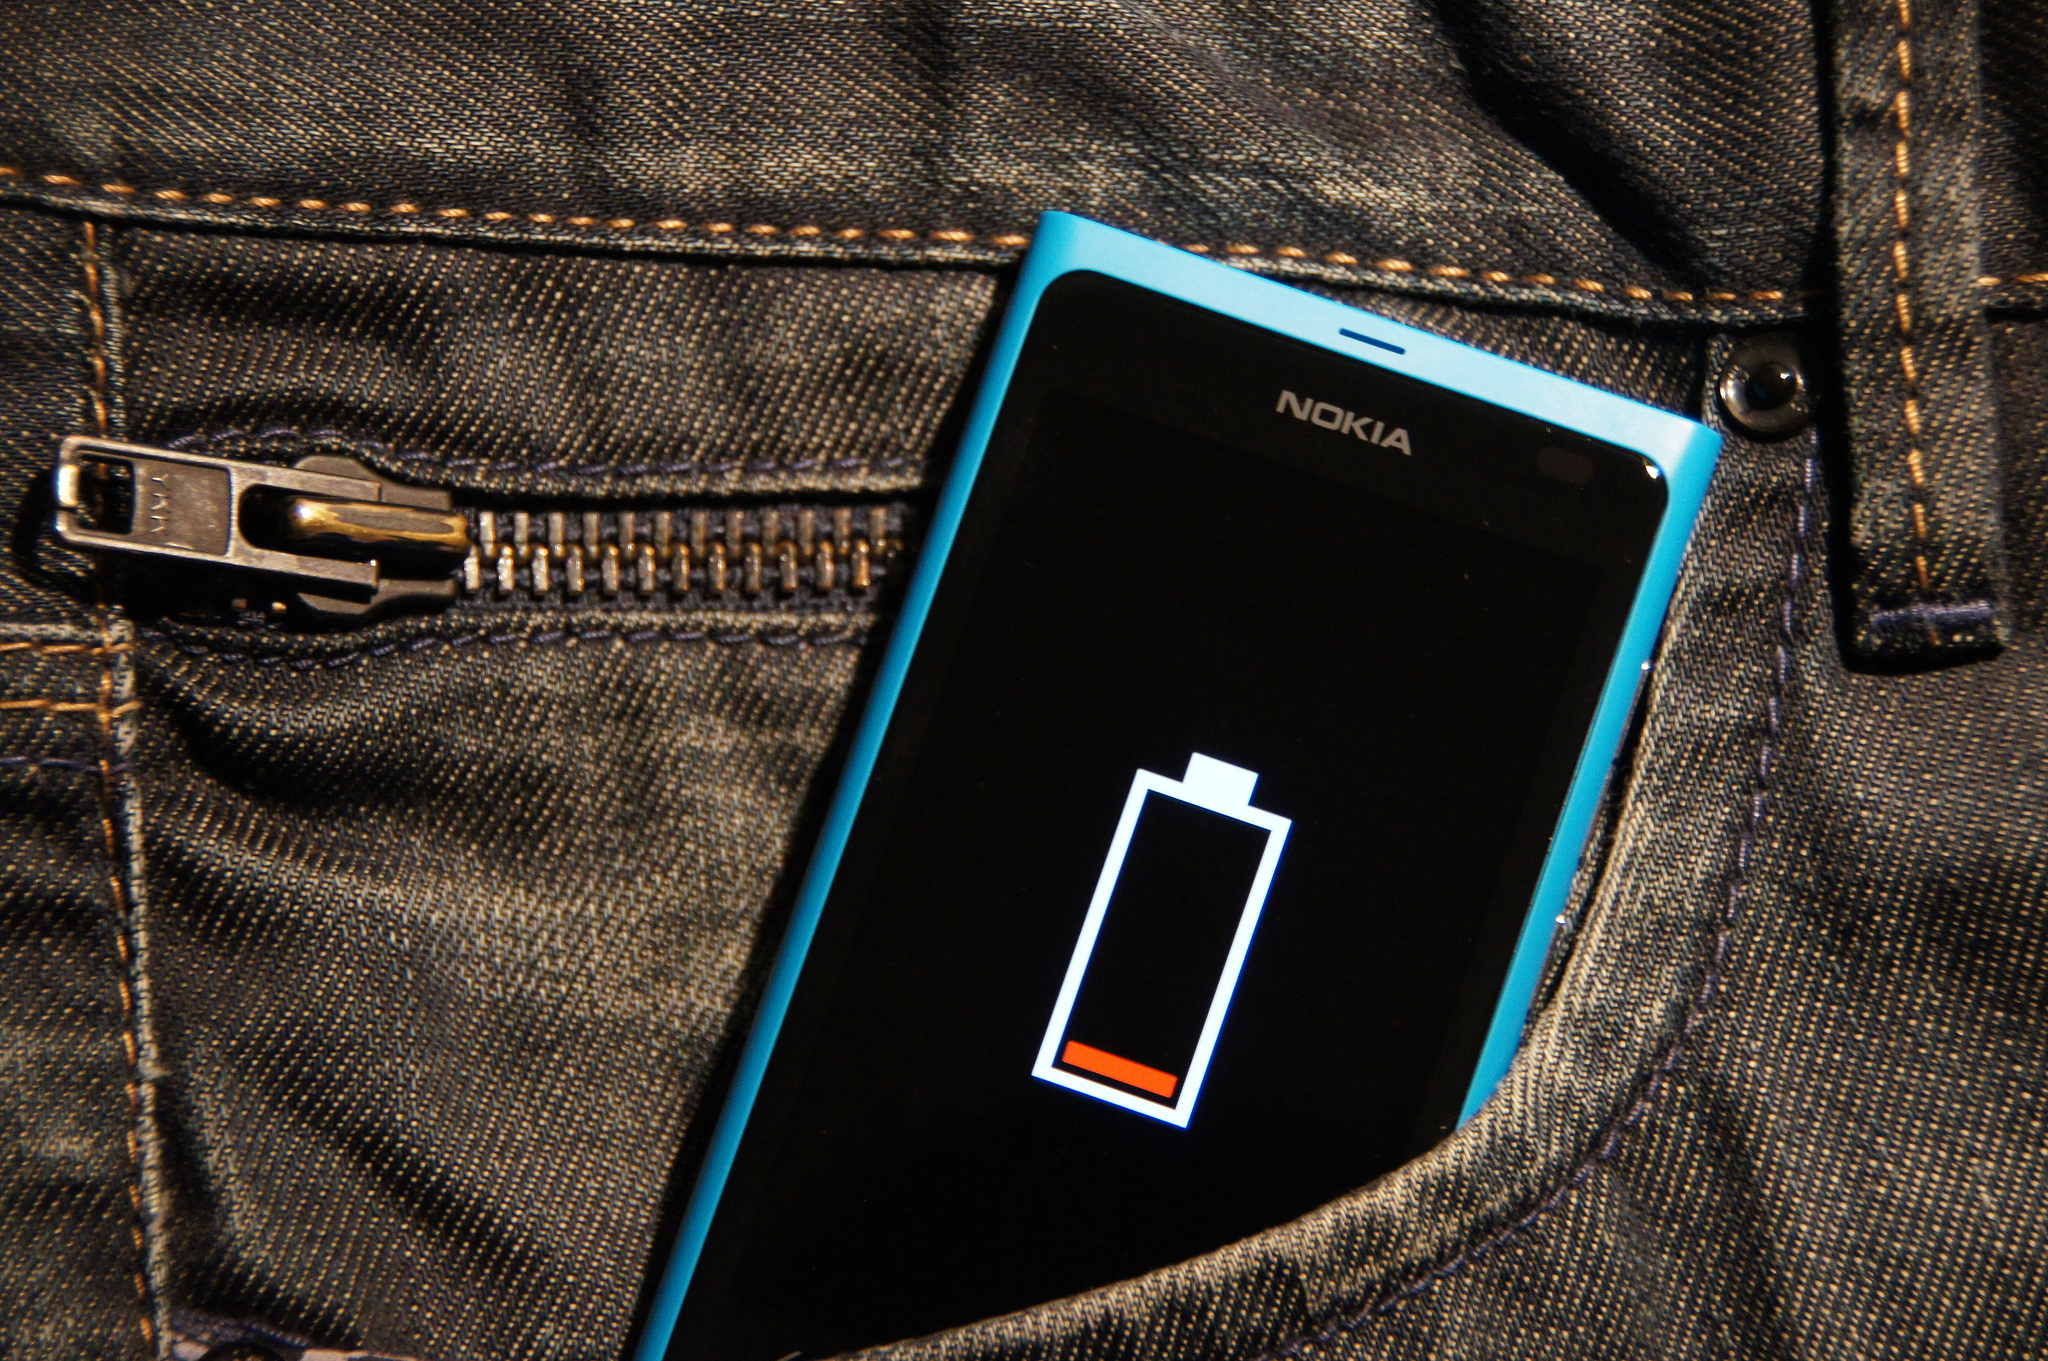 Nokia Lumia 800 - rozładowana bateria